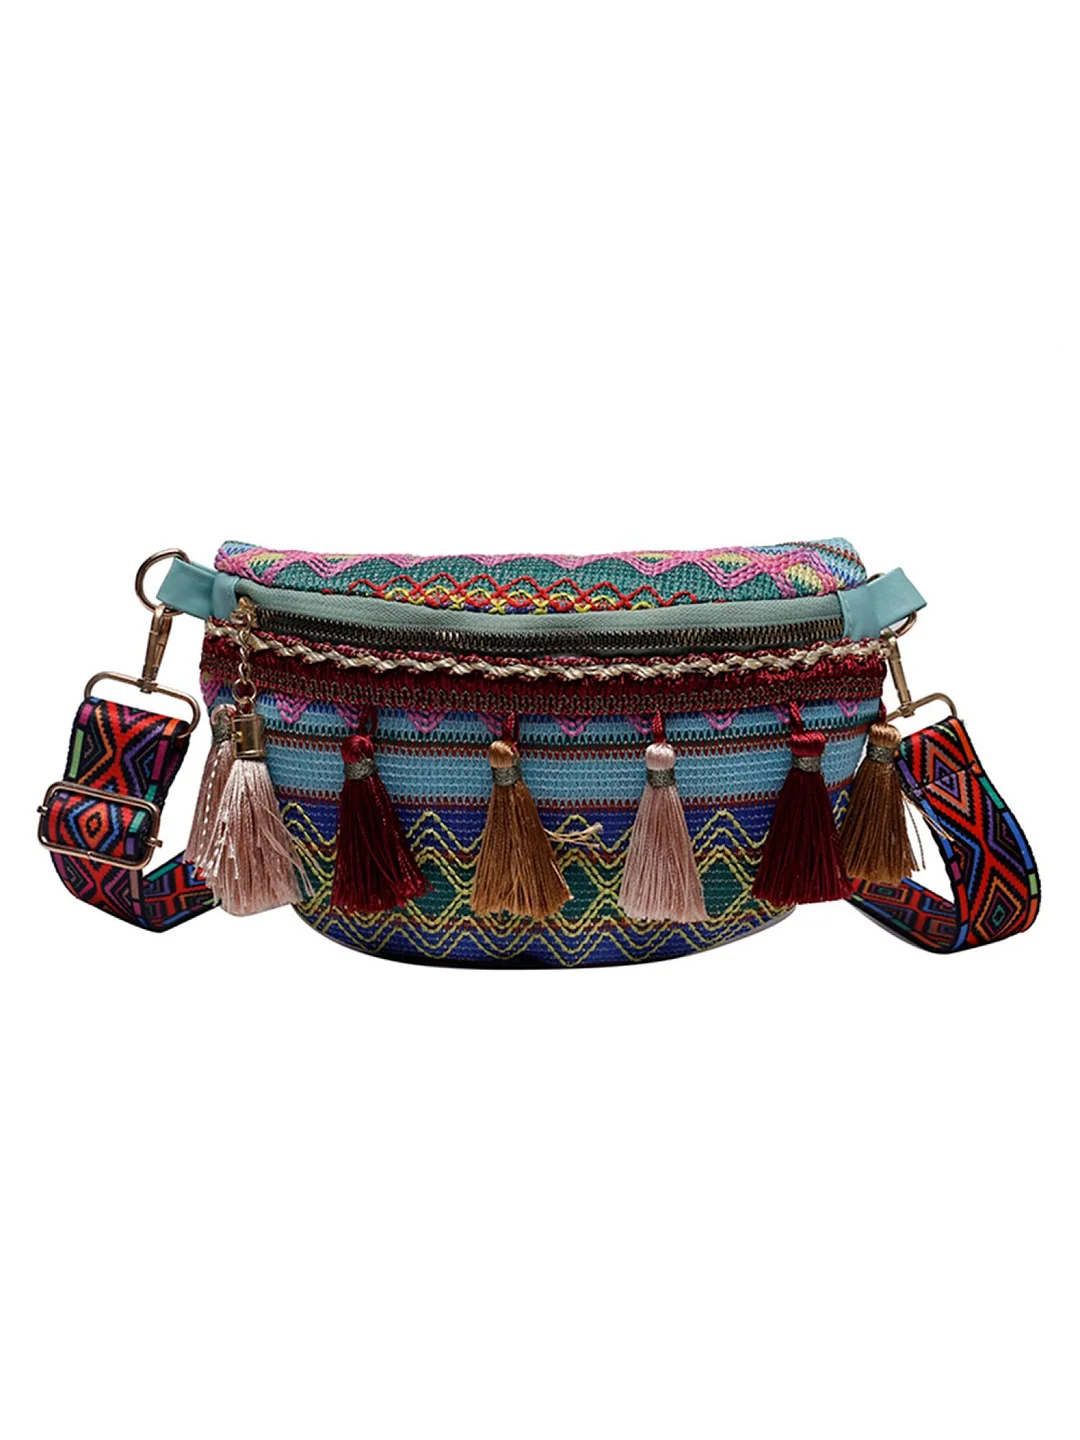 Crossbody Bag - Ethnic Style